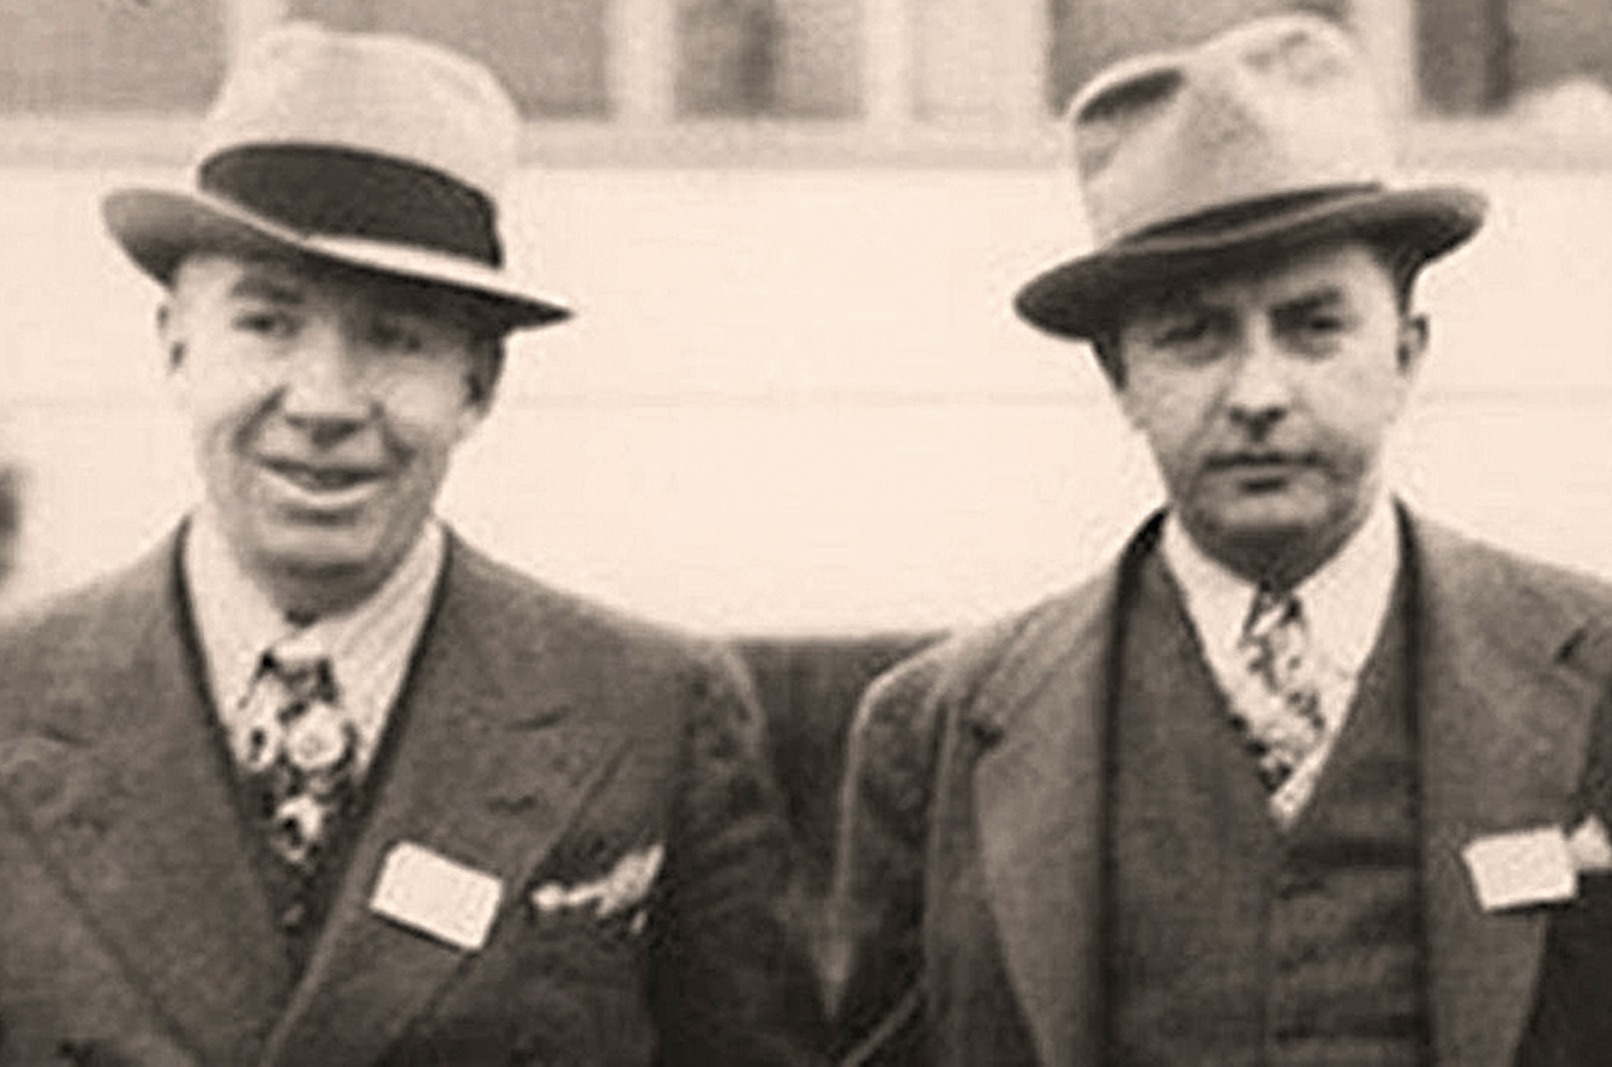 The Founders of Motorola Paul and Joseph Galvin